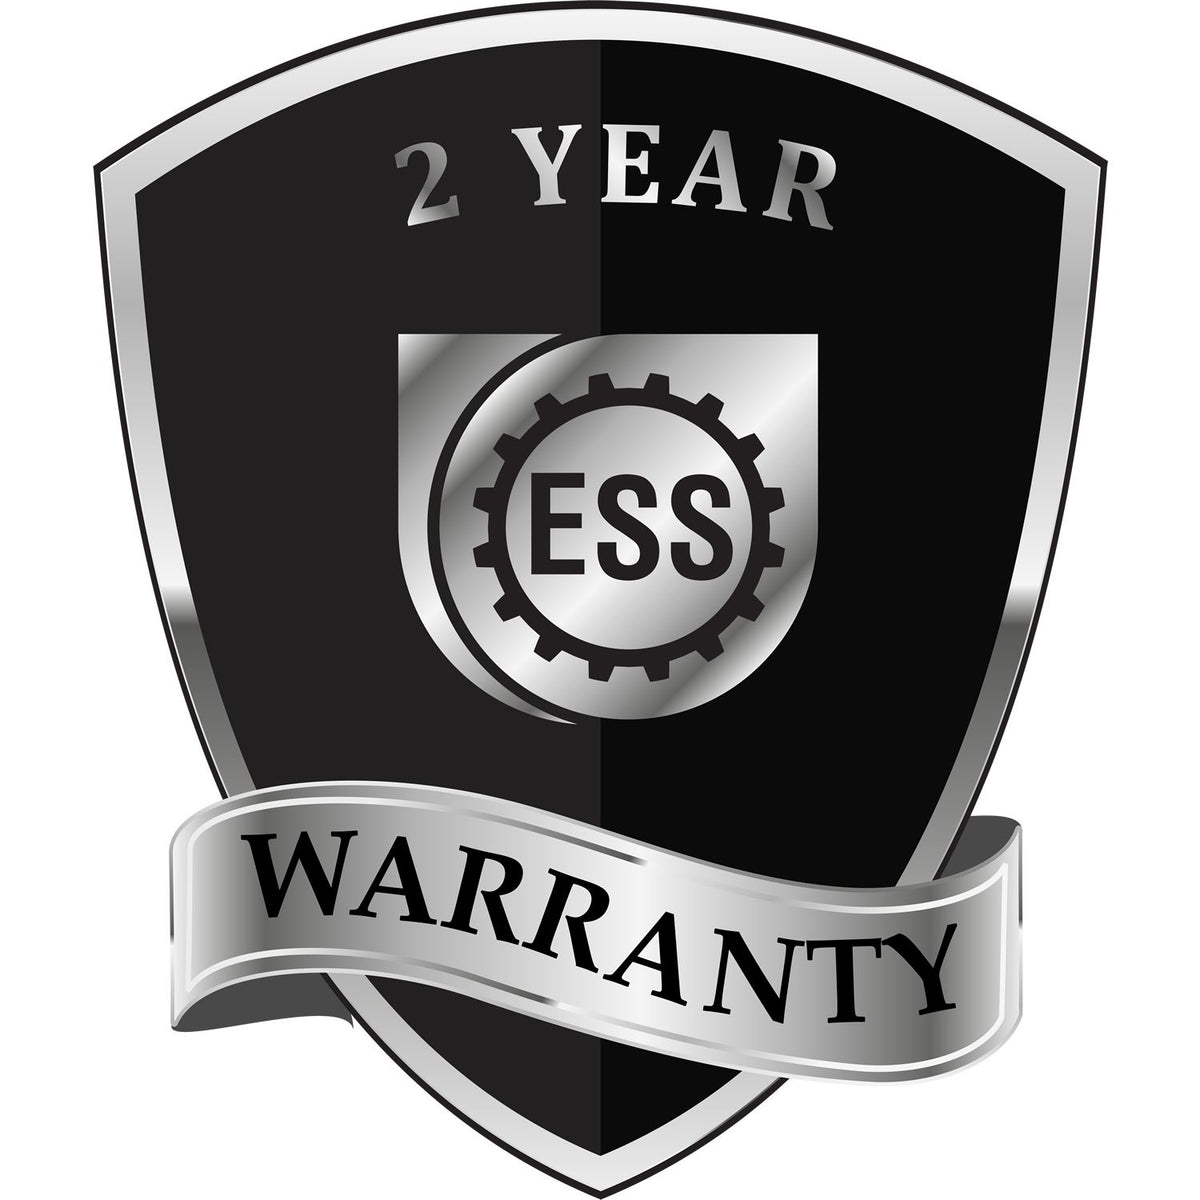 A black and silver badge or emblem showing warranty information for the Gift Nebraska Engineer Seal